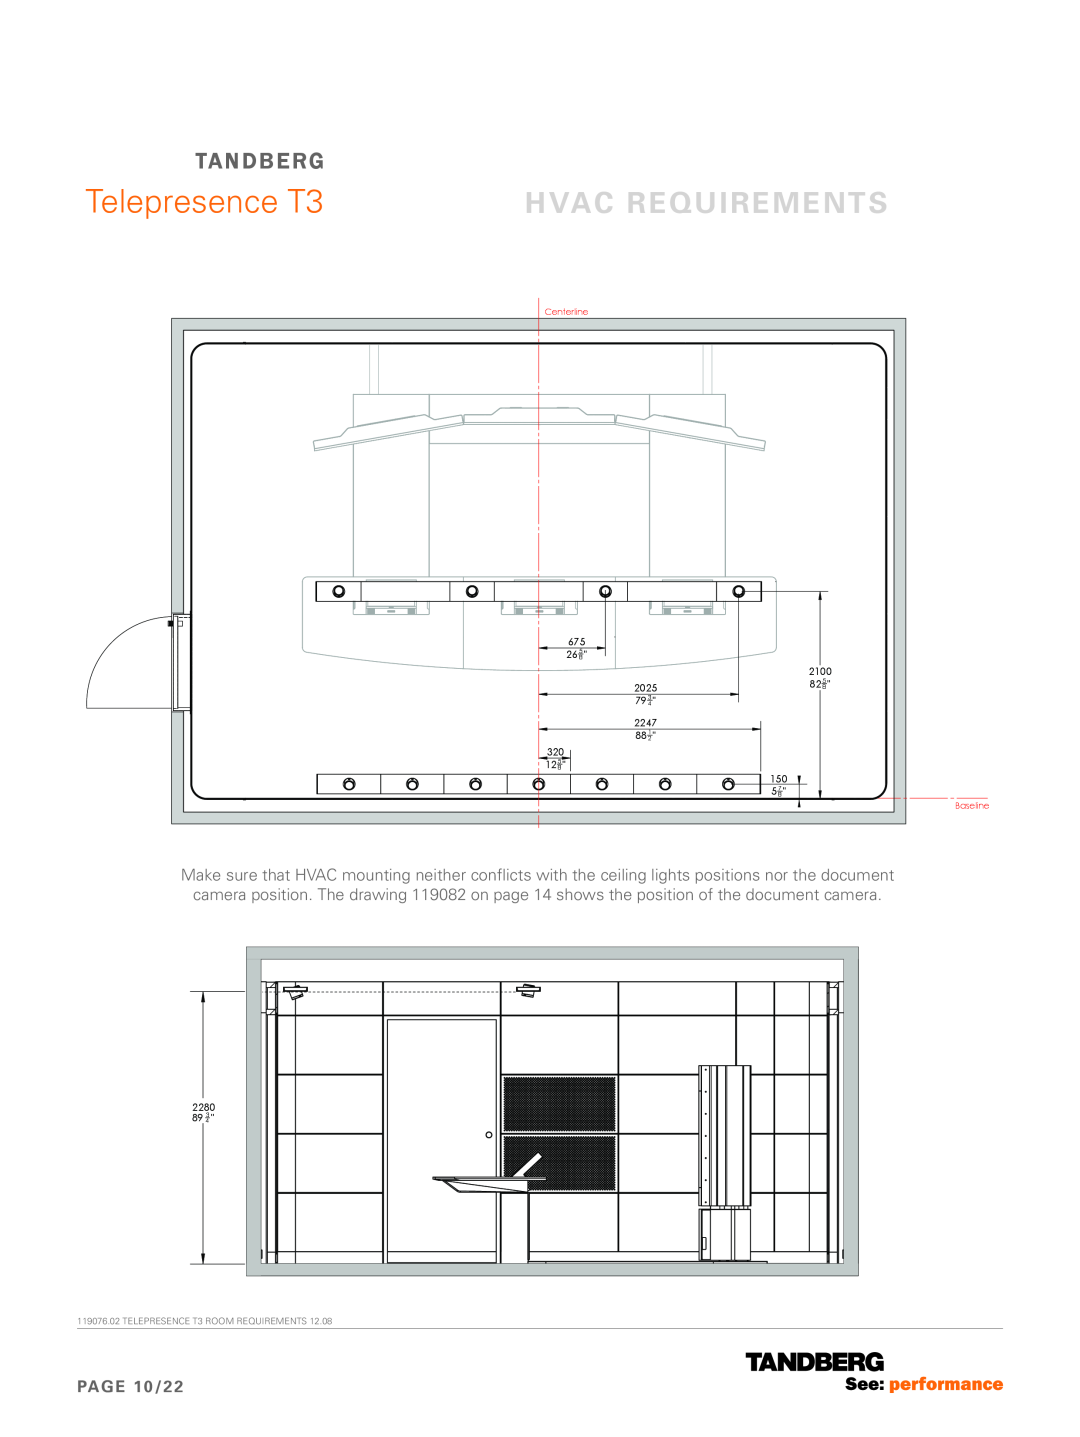 TANDBERG 119076.02 dimensions PAGE 10/22, Telepresence T3, Hvac Requirements, Tandberg 